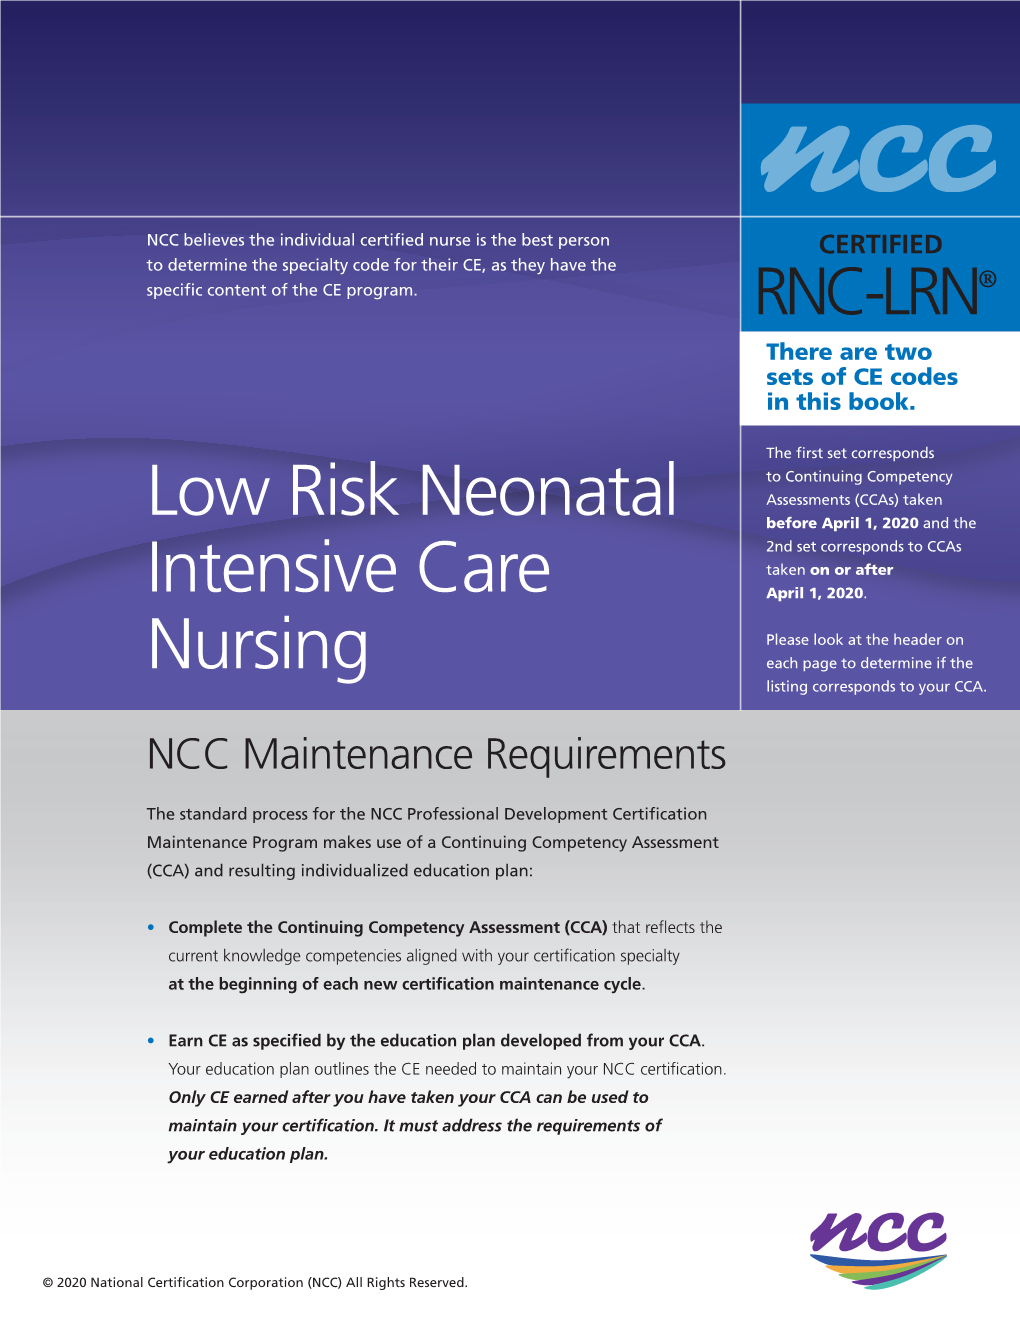 Low Risk Neonatal Intensive Care Nursing